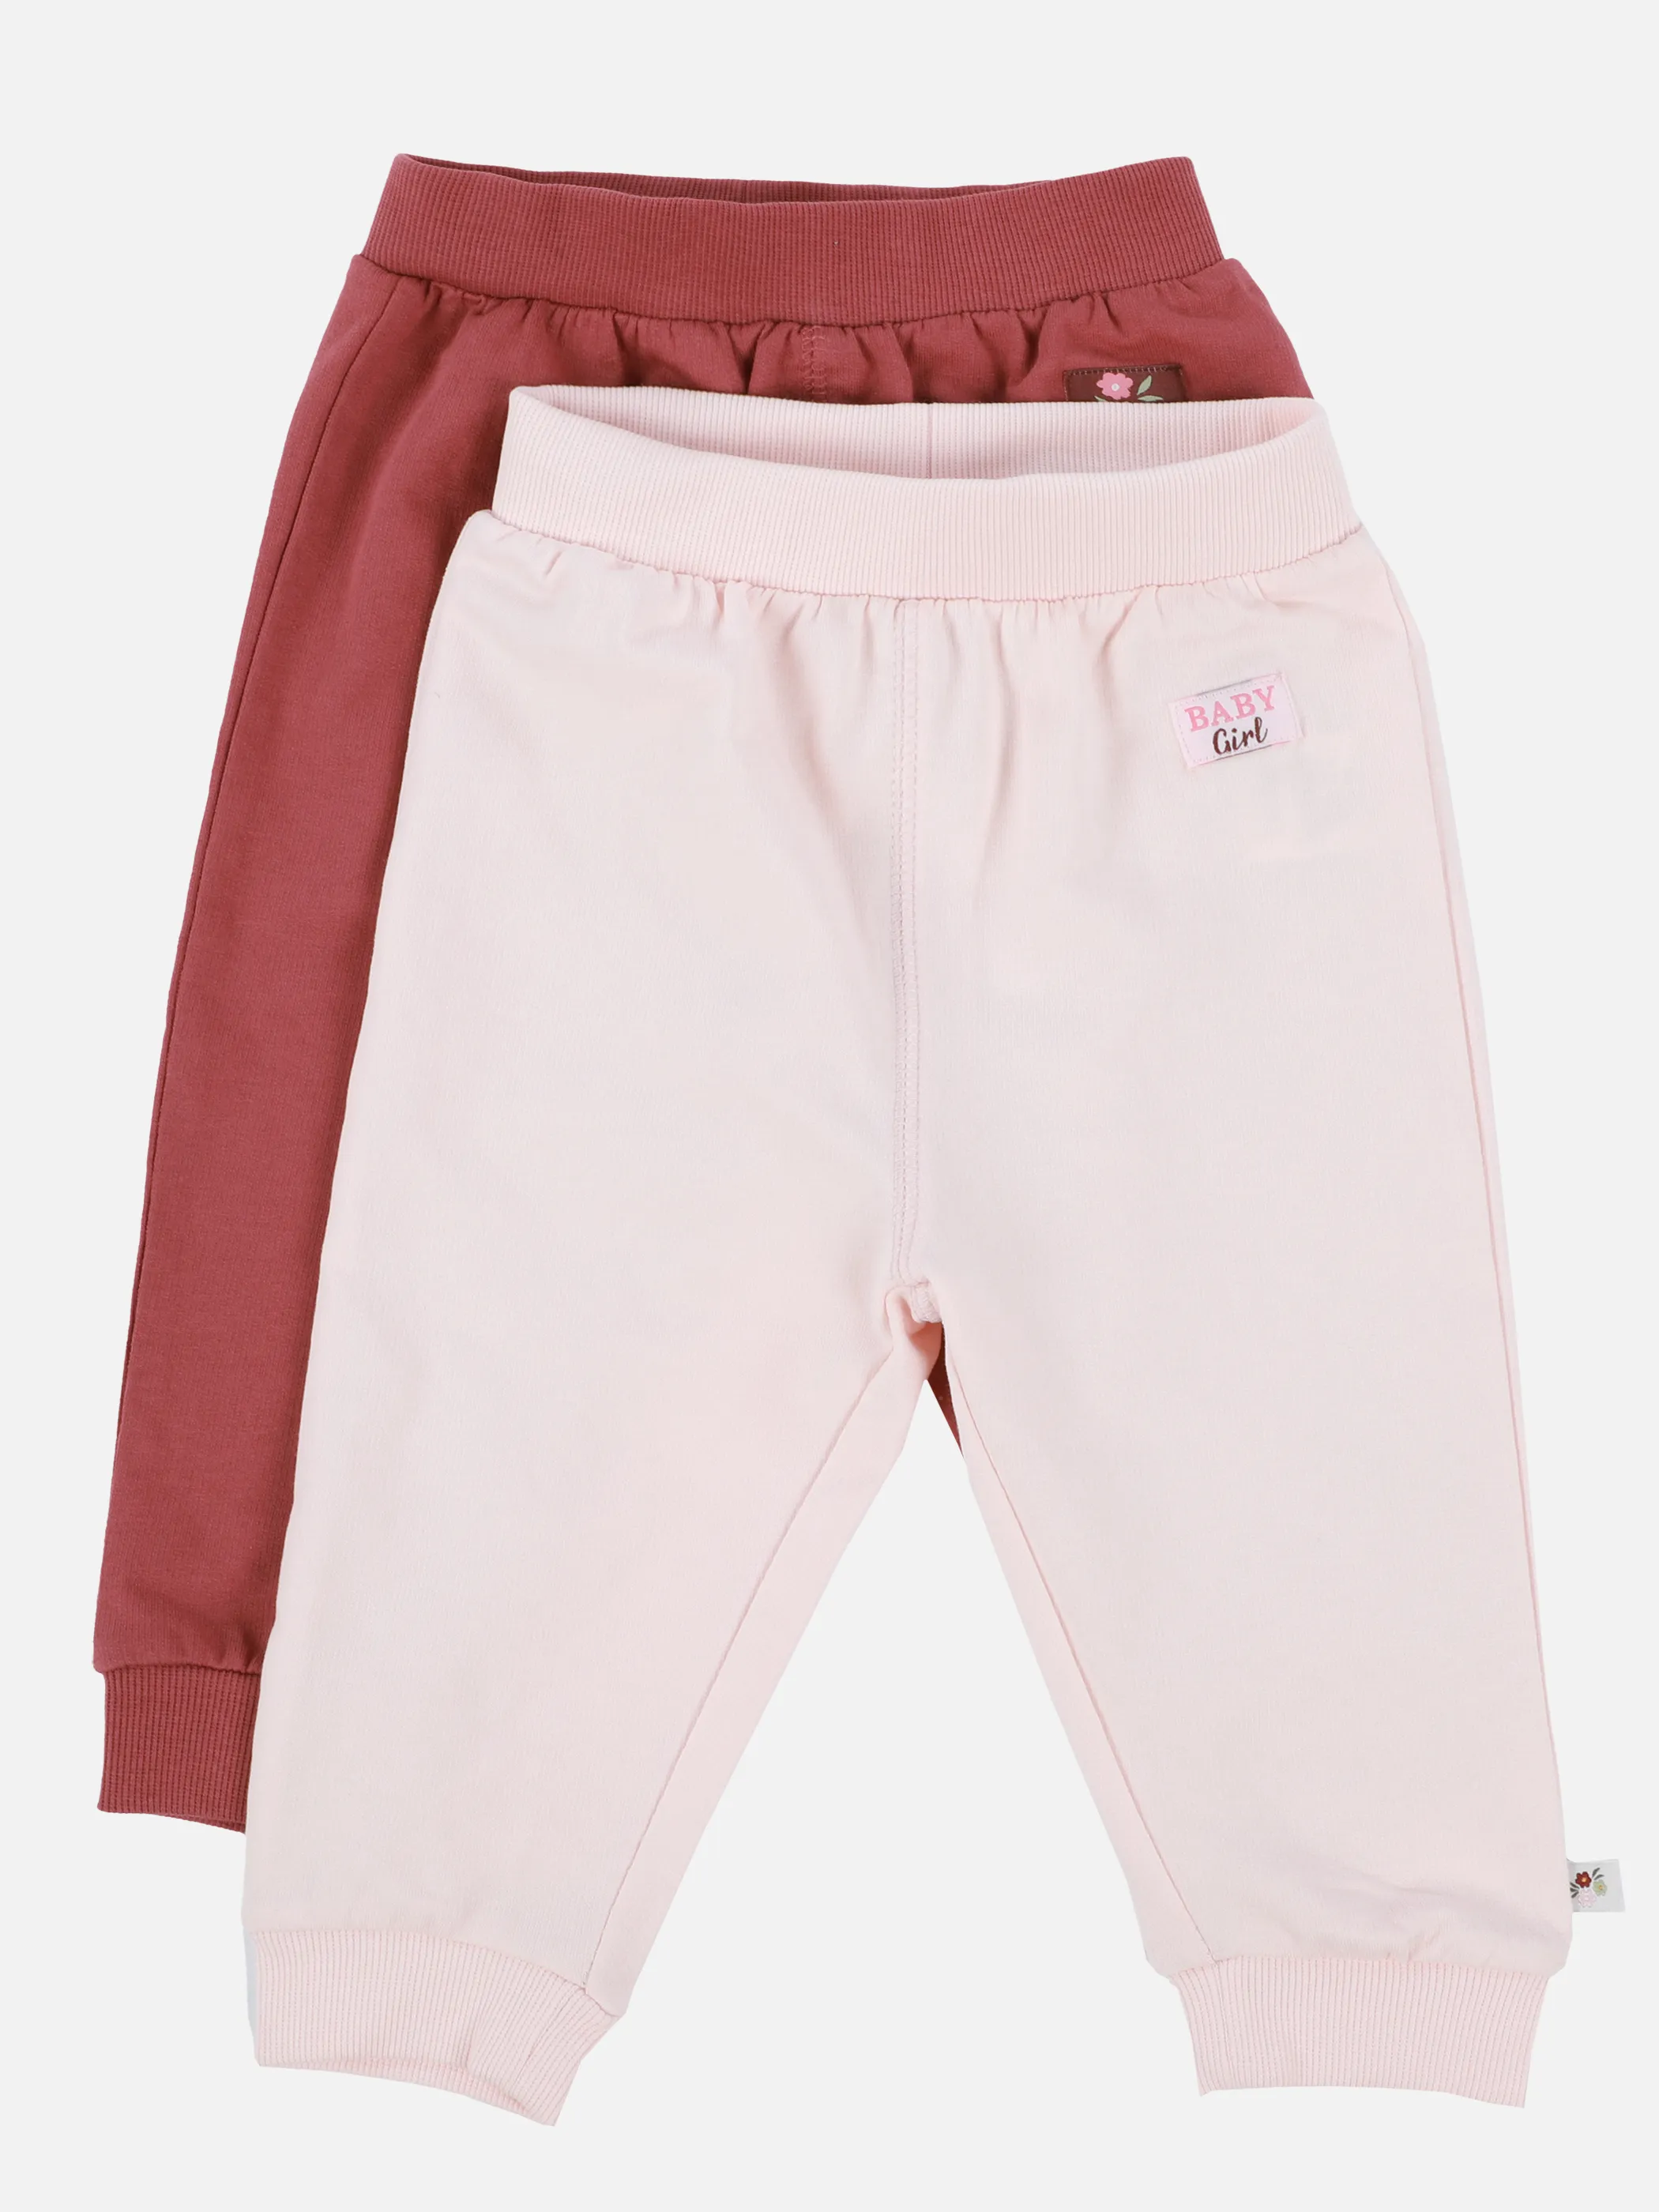 Bubble Gum Baby Mädchen 2er Pack Joggpants in rot und rosa Rosa 898696 ROSA 1